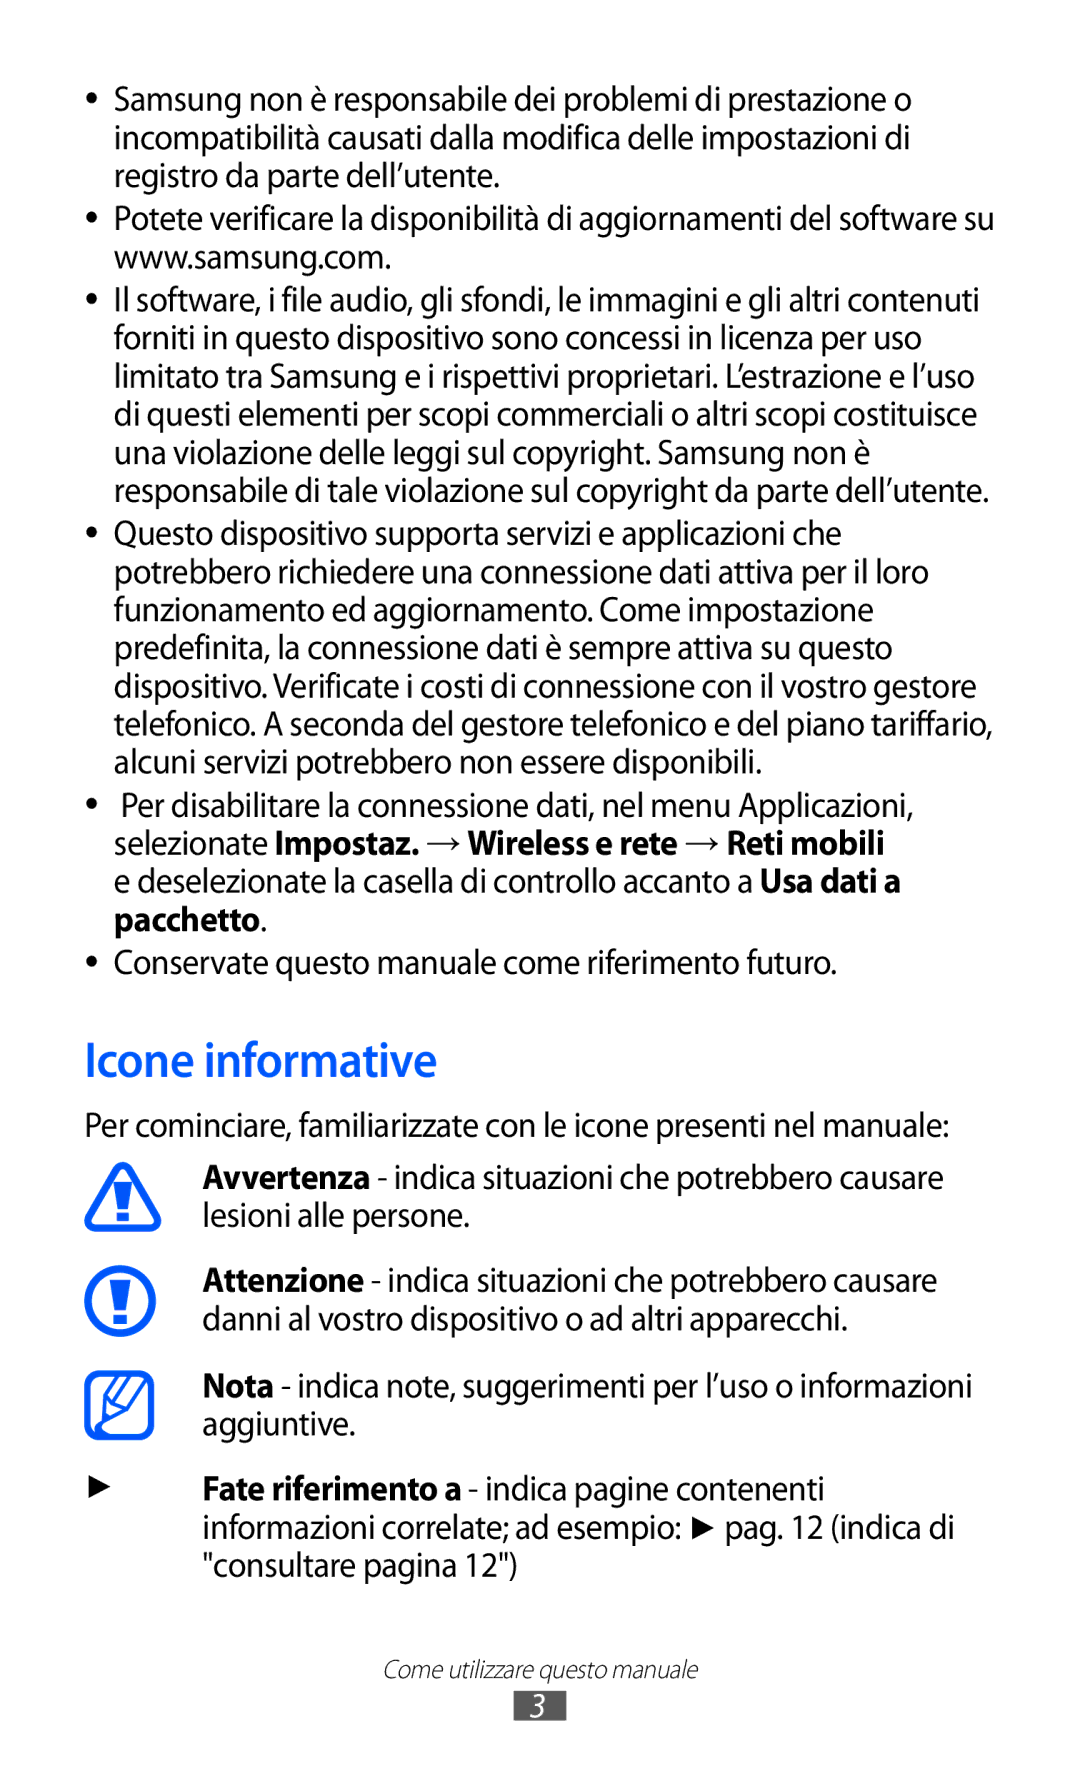 Samsung GT-I8150FKAITV, GT-I8150EWAITV manual Icone informative 